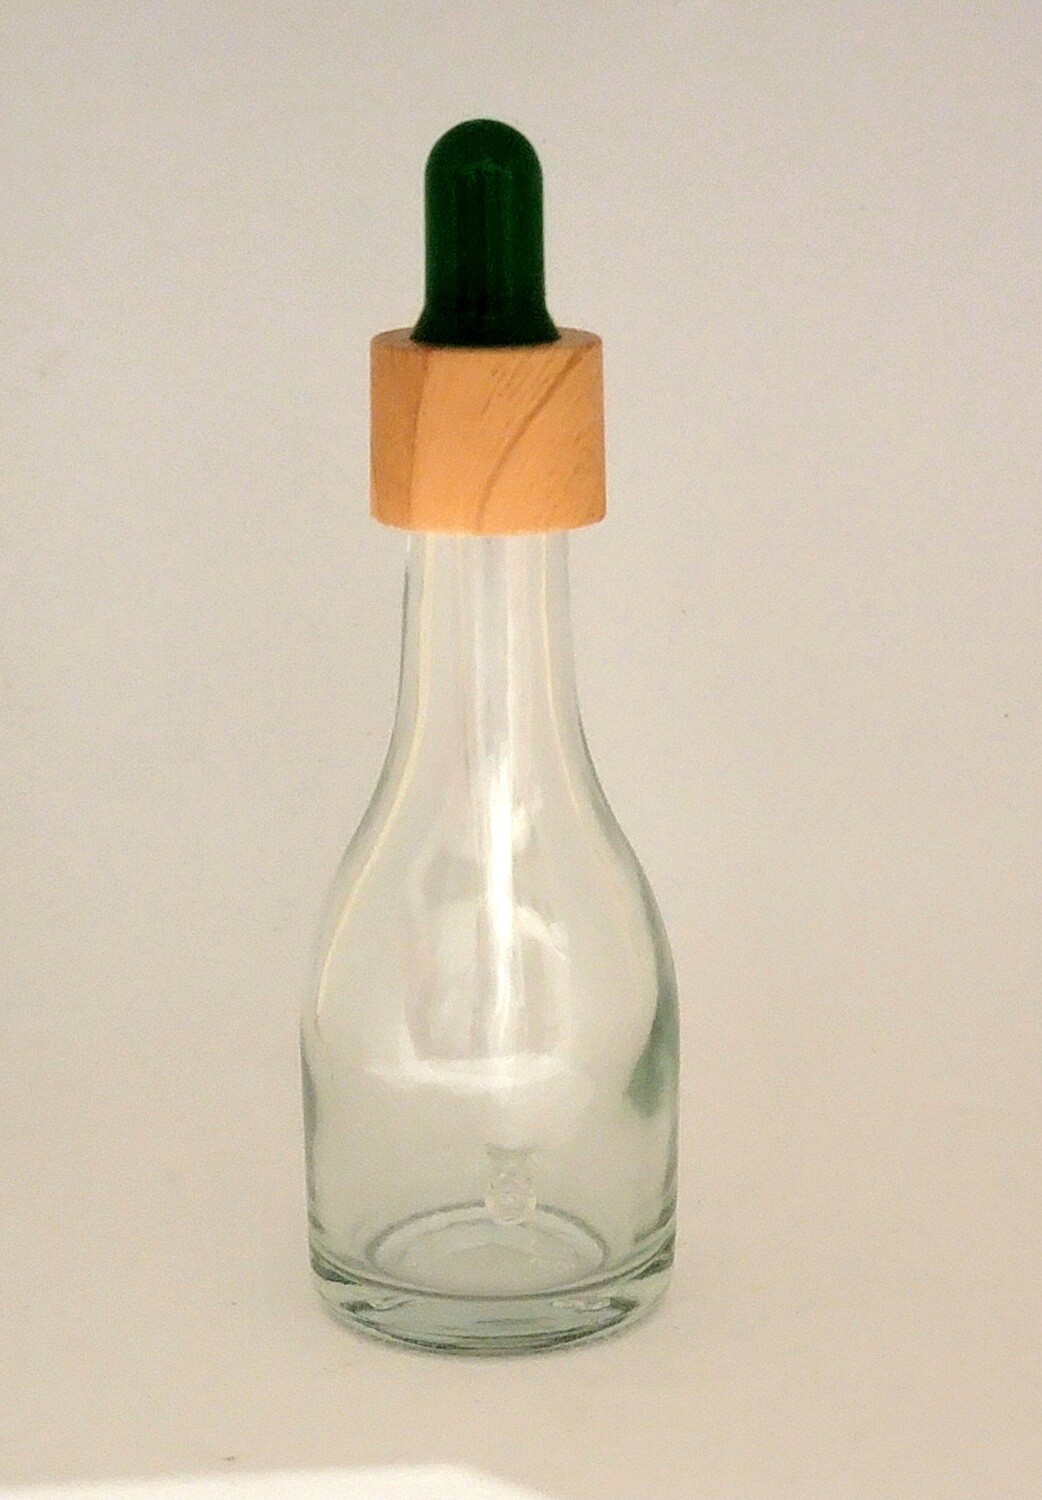 30mL WAIST GLASS with Timber Cap & Black Teat DROPPER SET  - SINGLE BUY